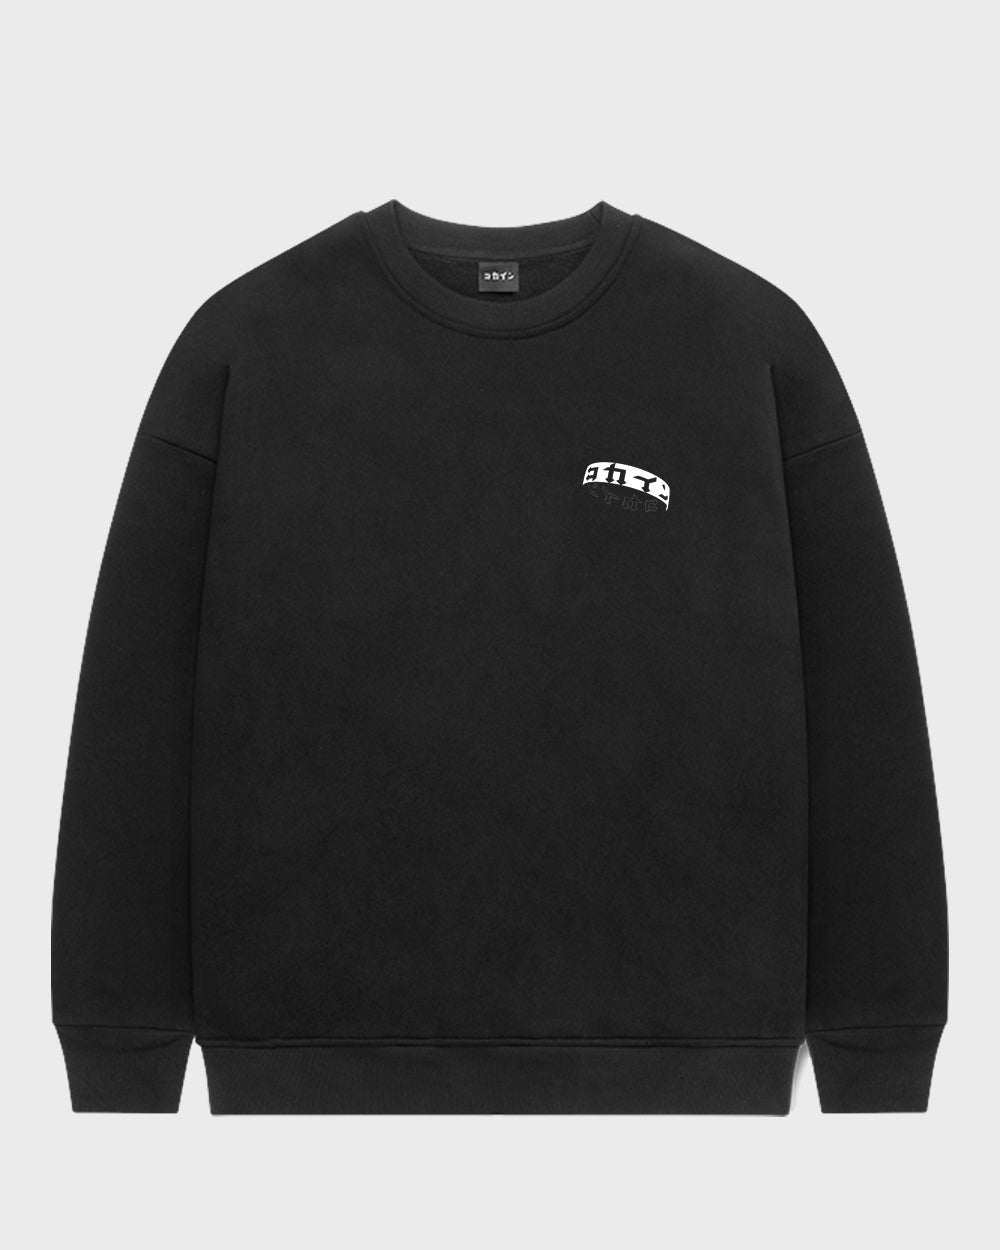 "8 YEARS" Crewneck Sweater // BLACK